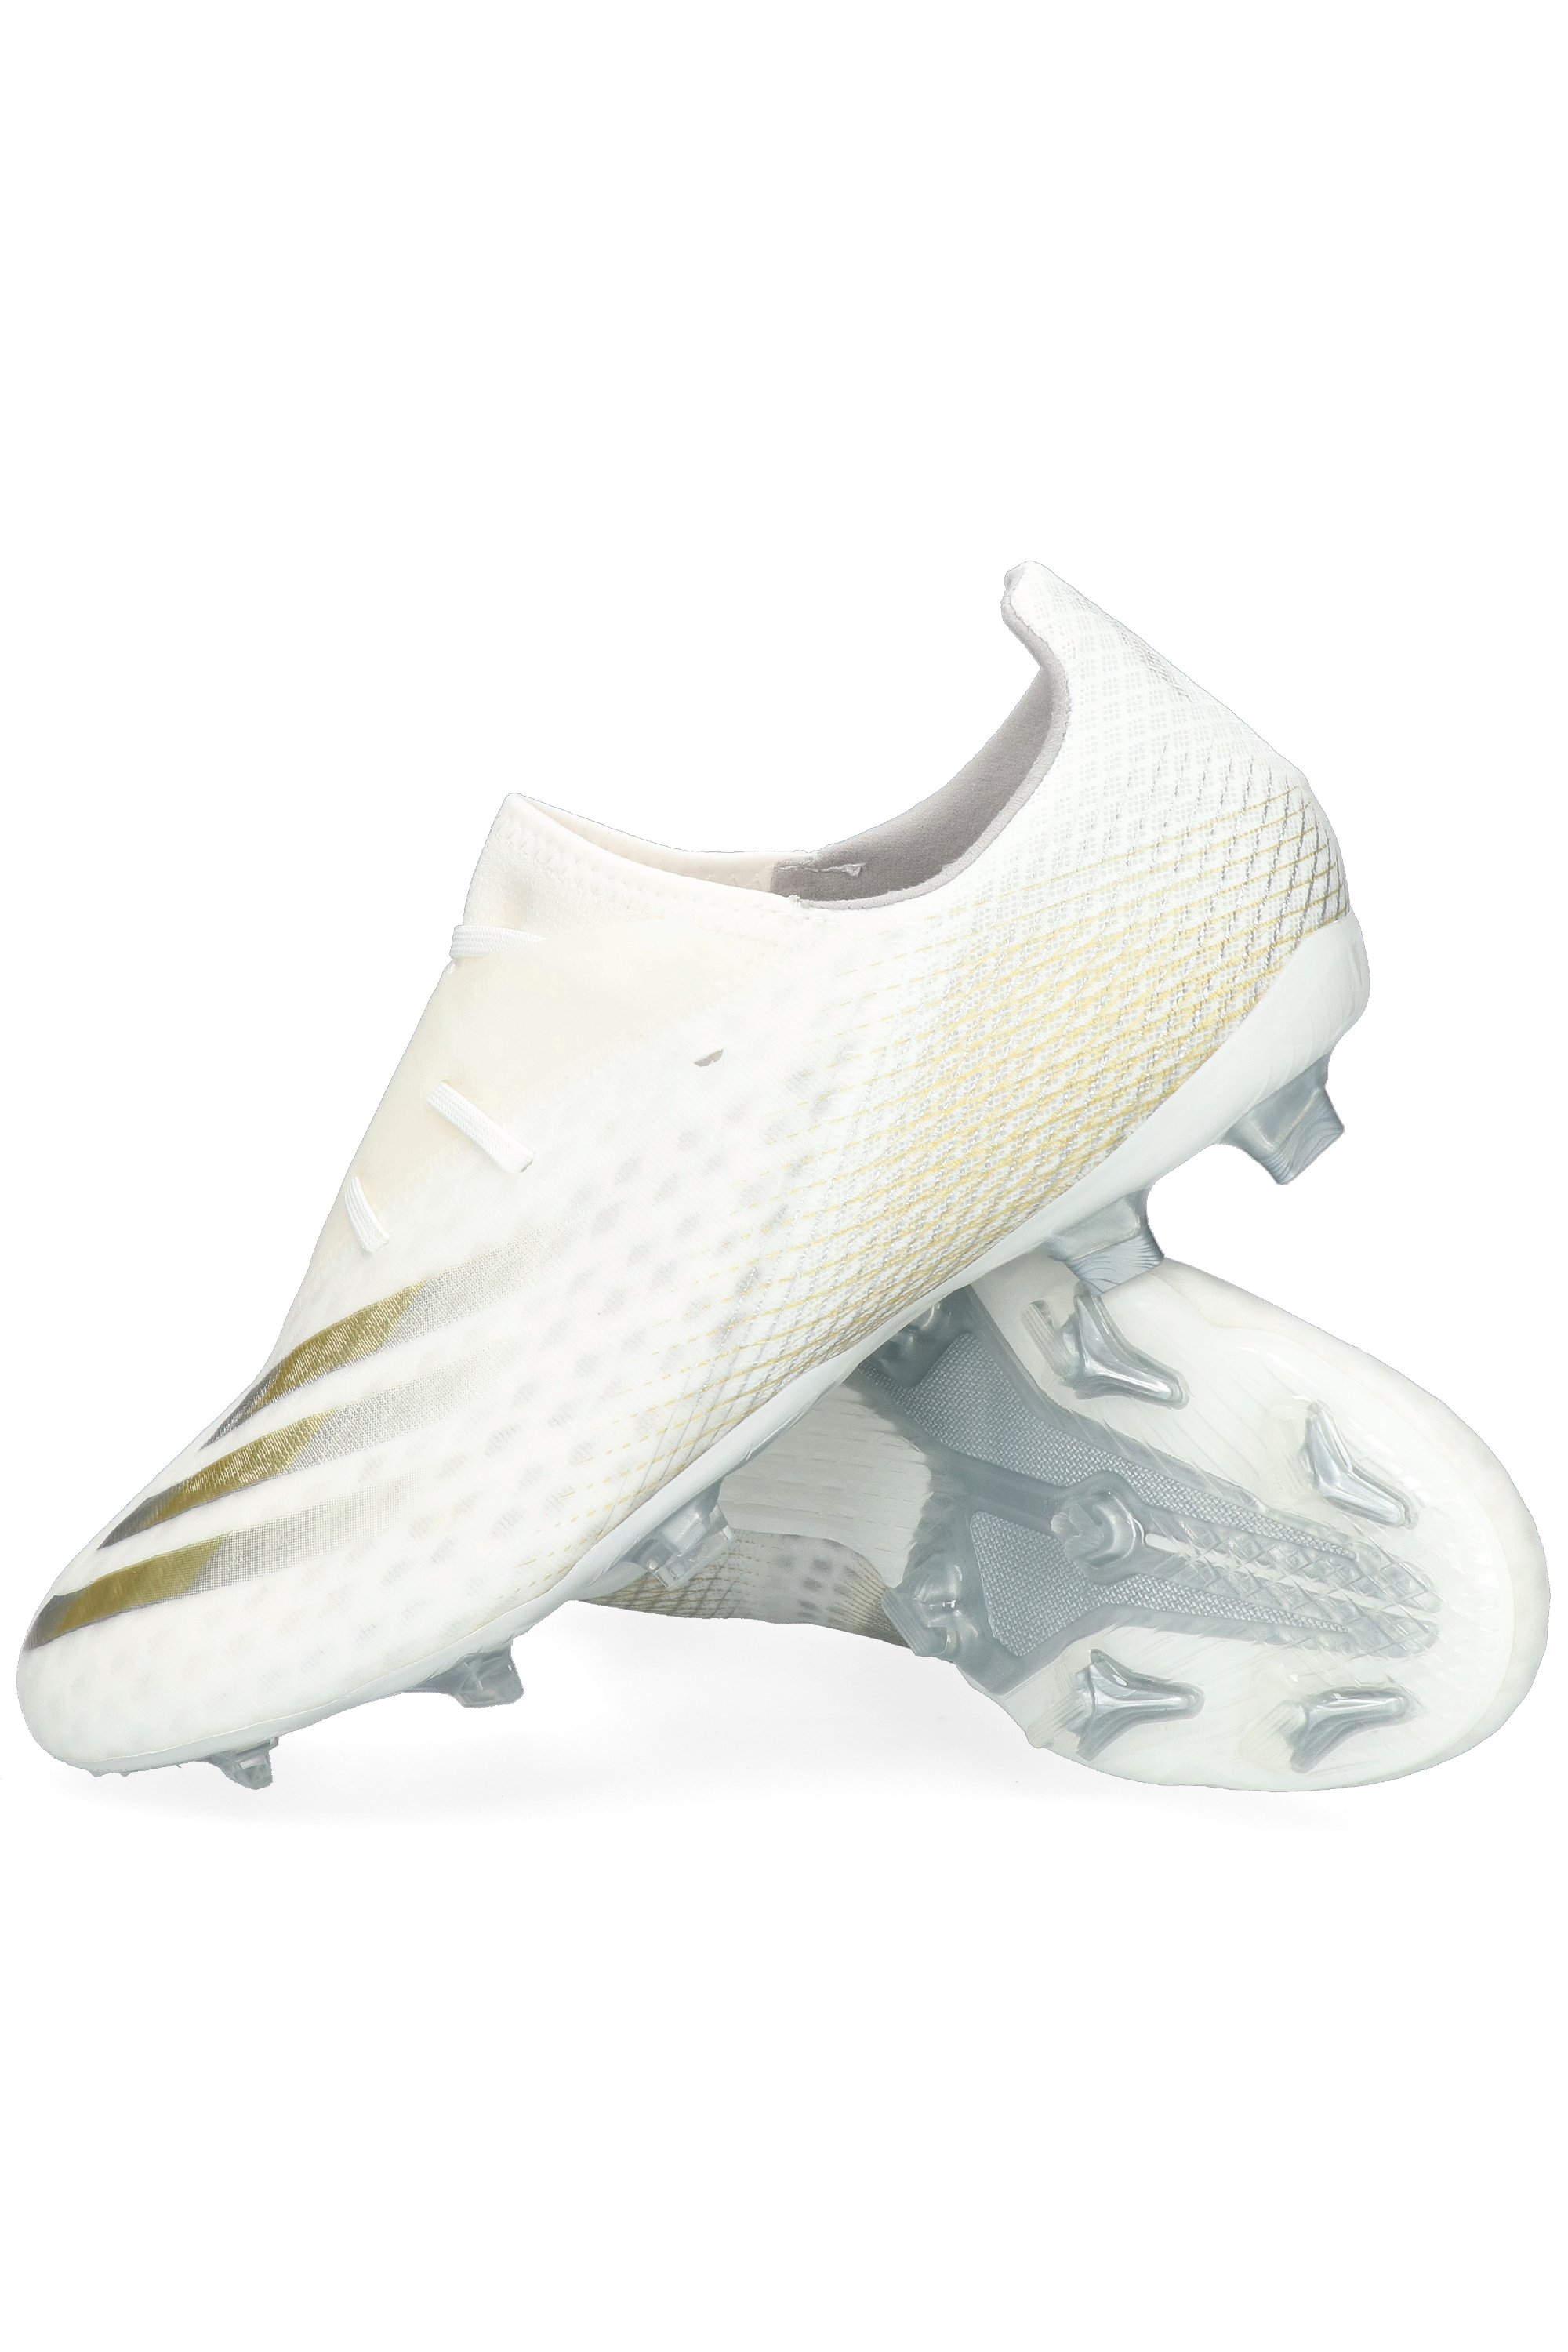 adidas X Ghosted.2 FG | R-GOL.com - Football boots \u0026 equipment